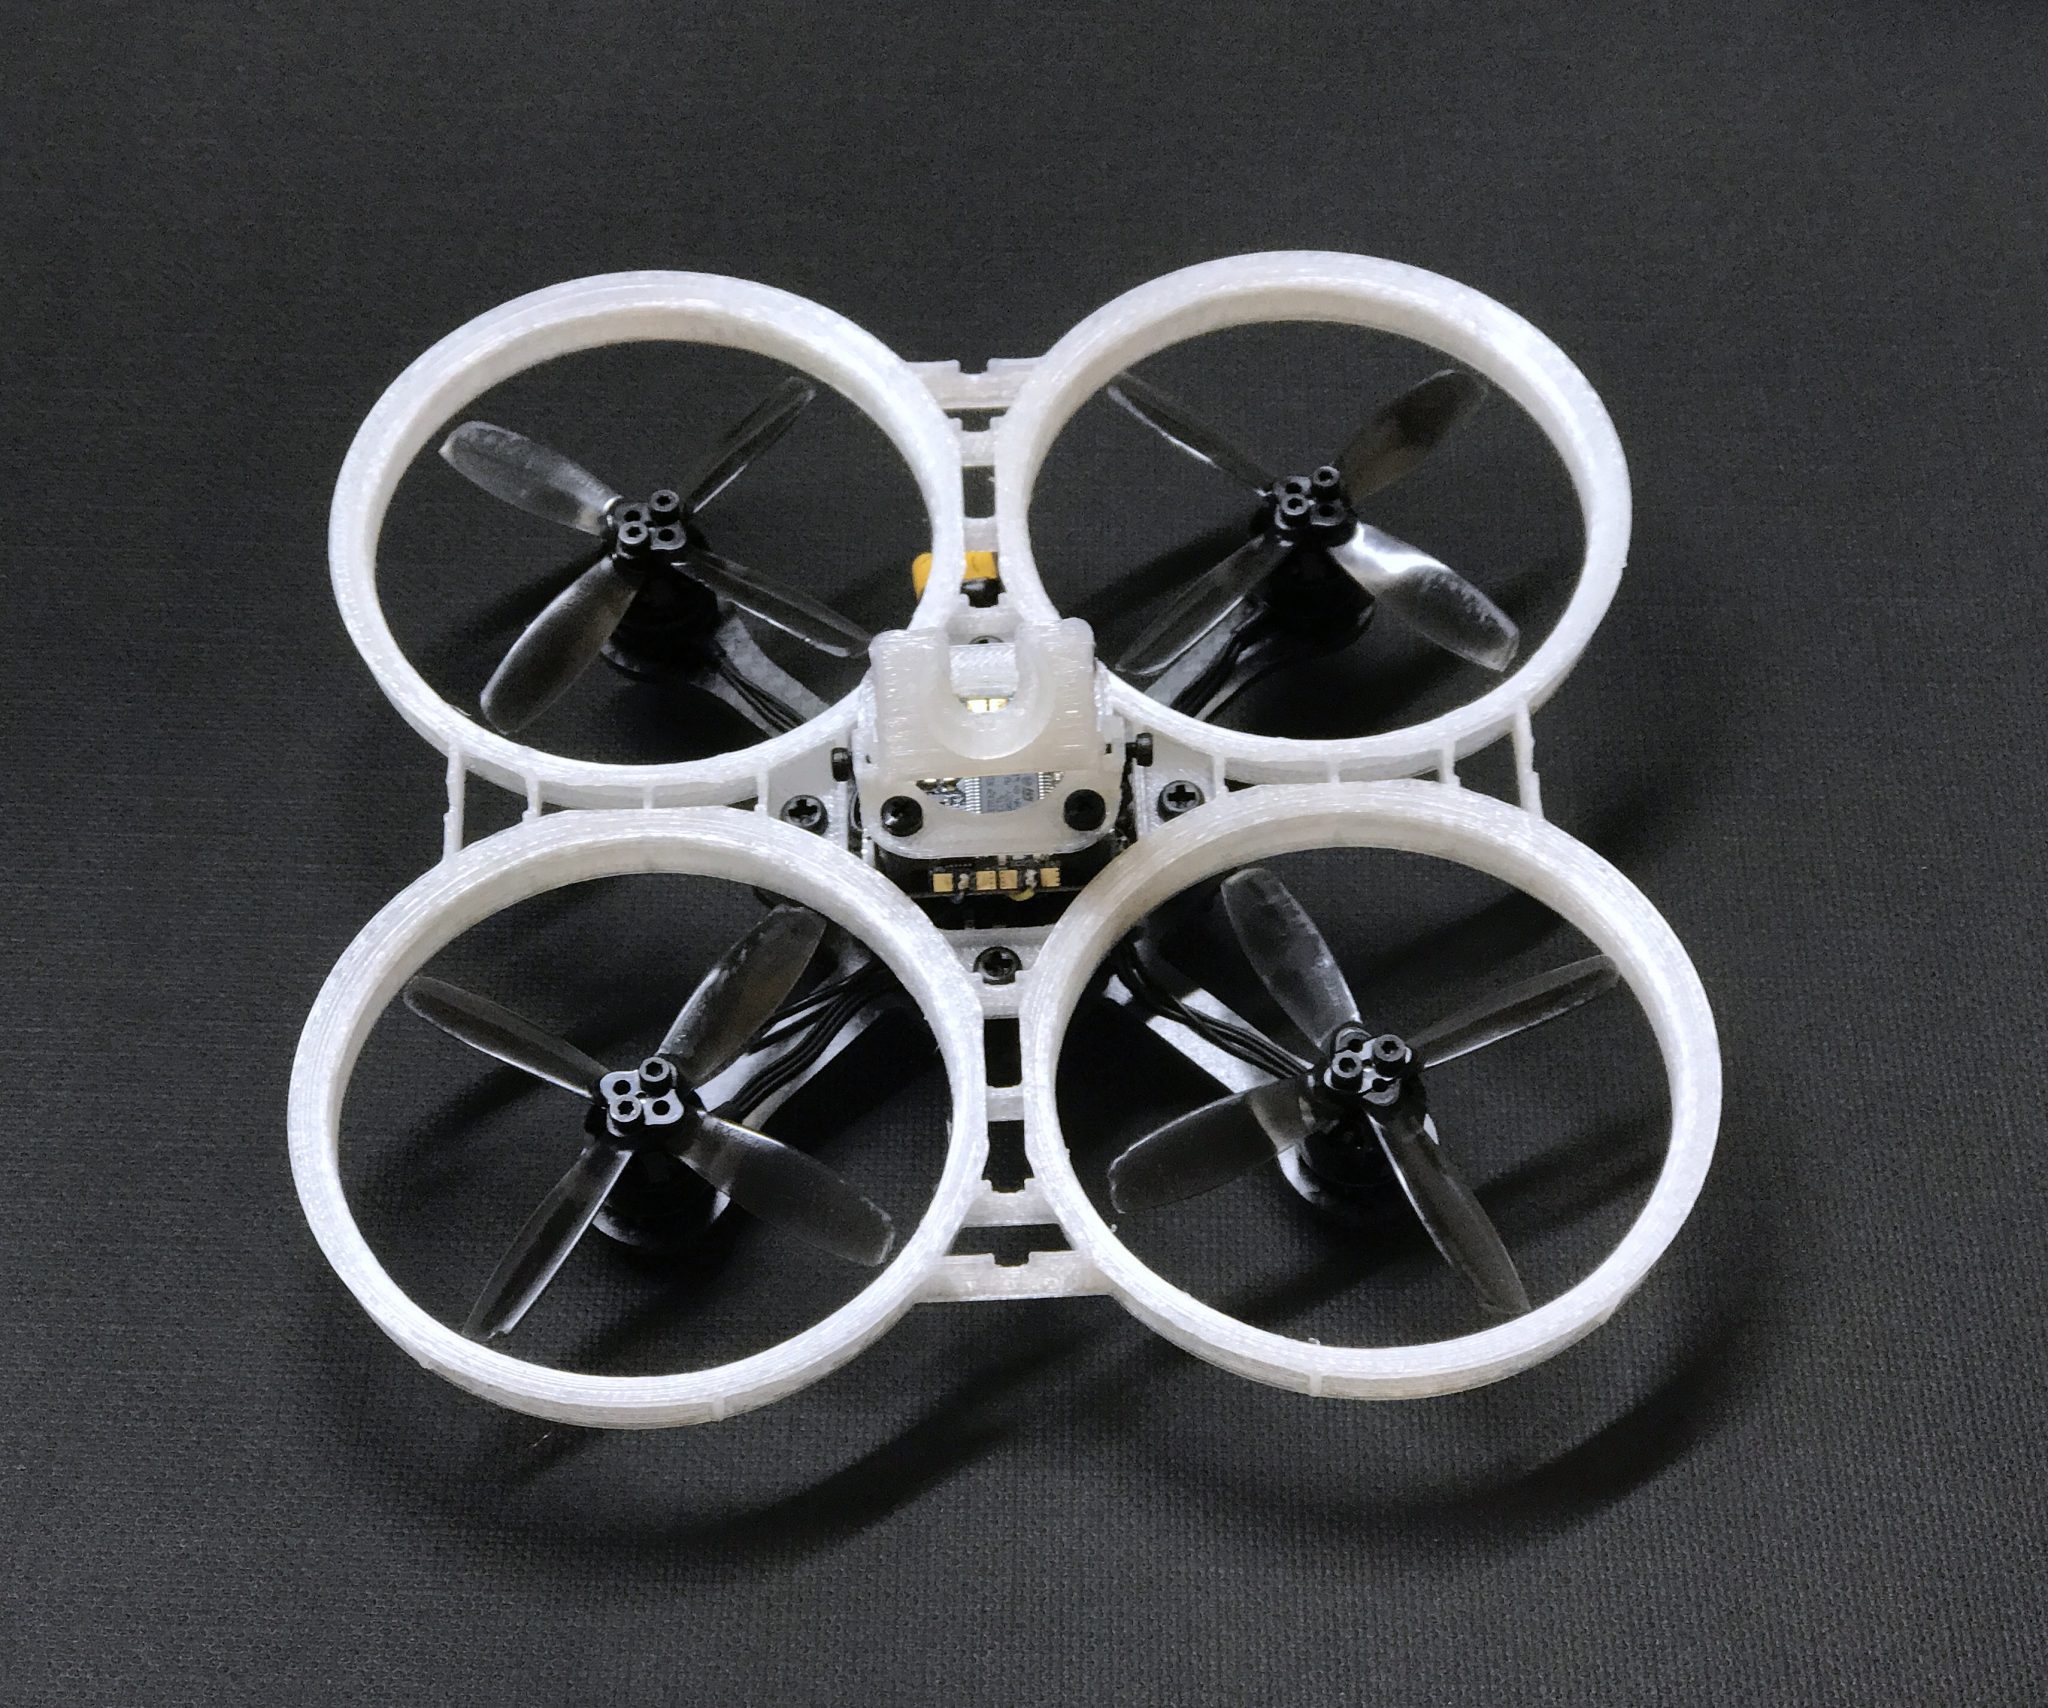 Lady X Owl - FPV Racing Proximity Drone Frame